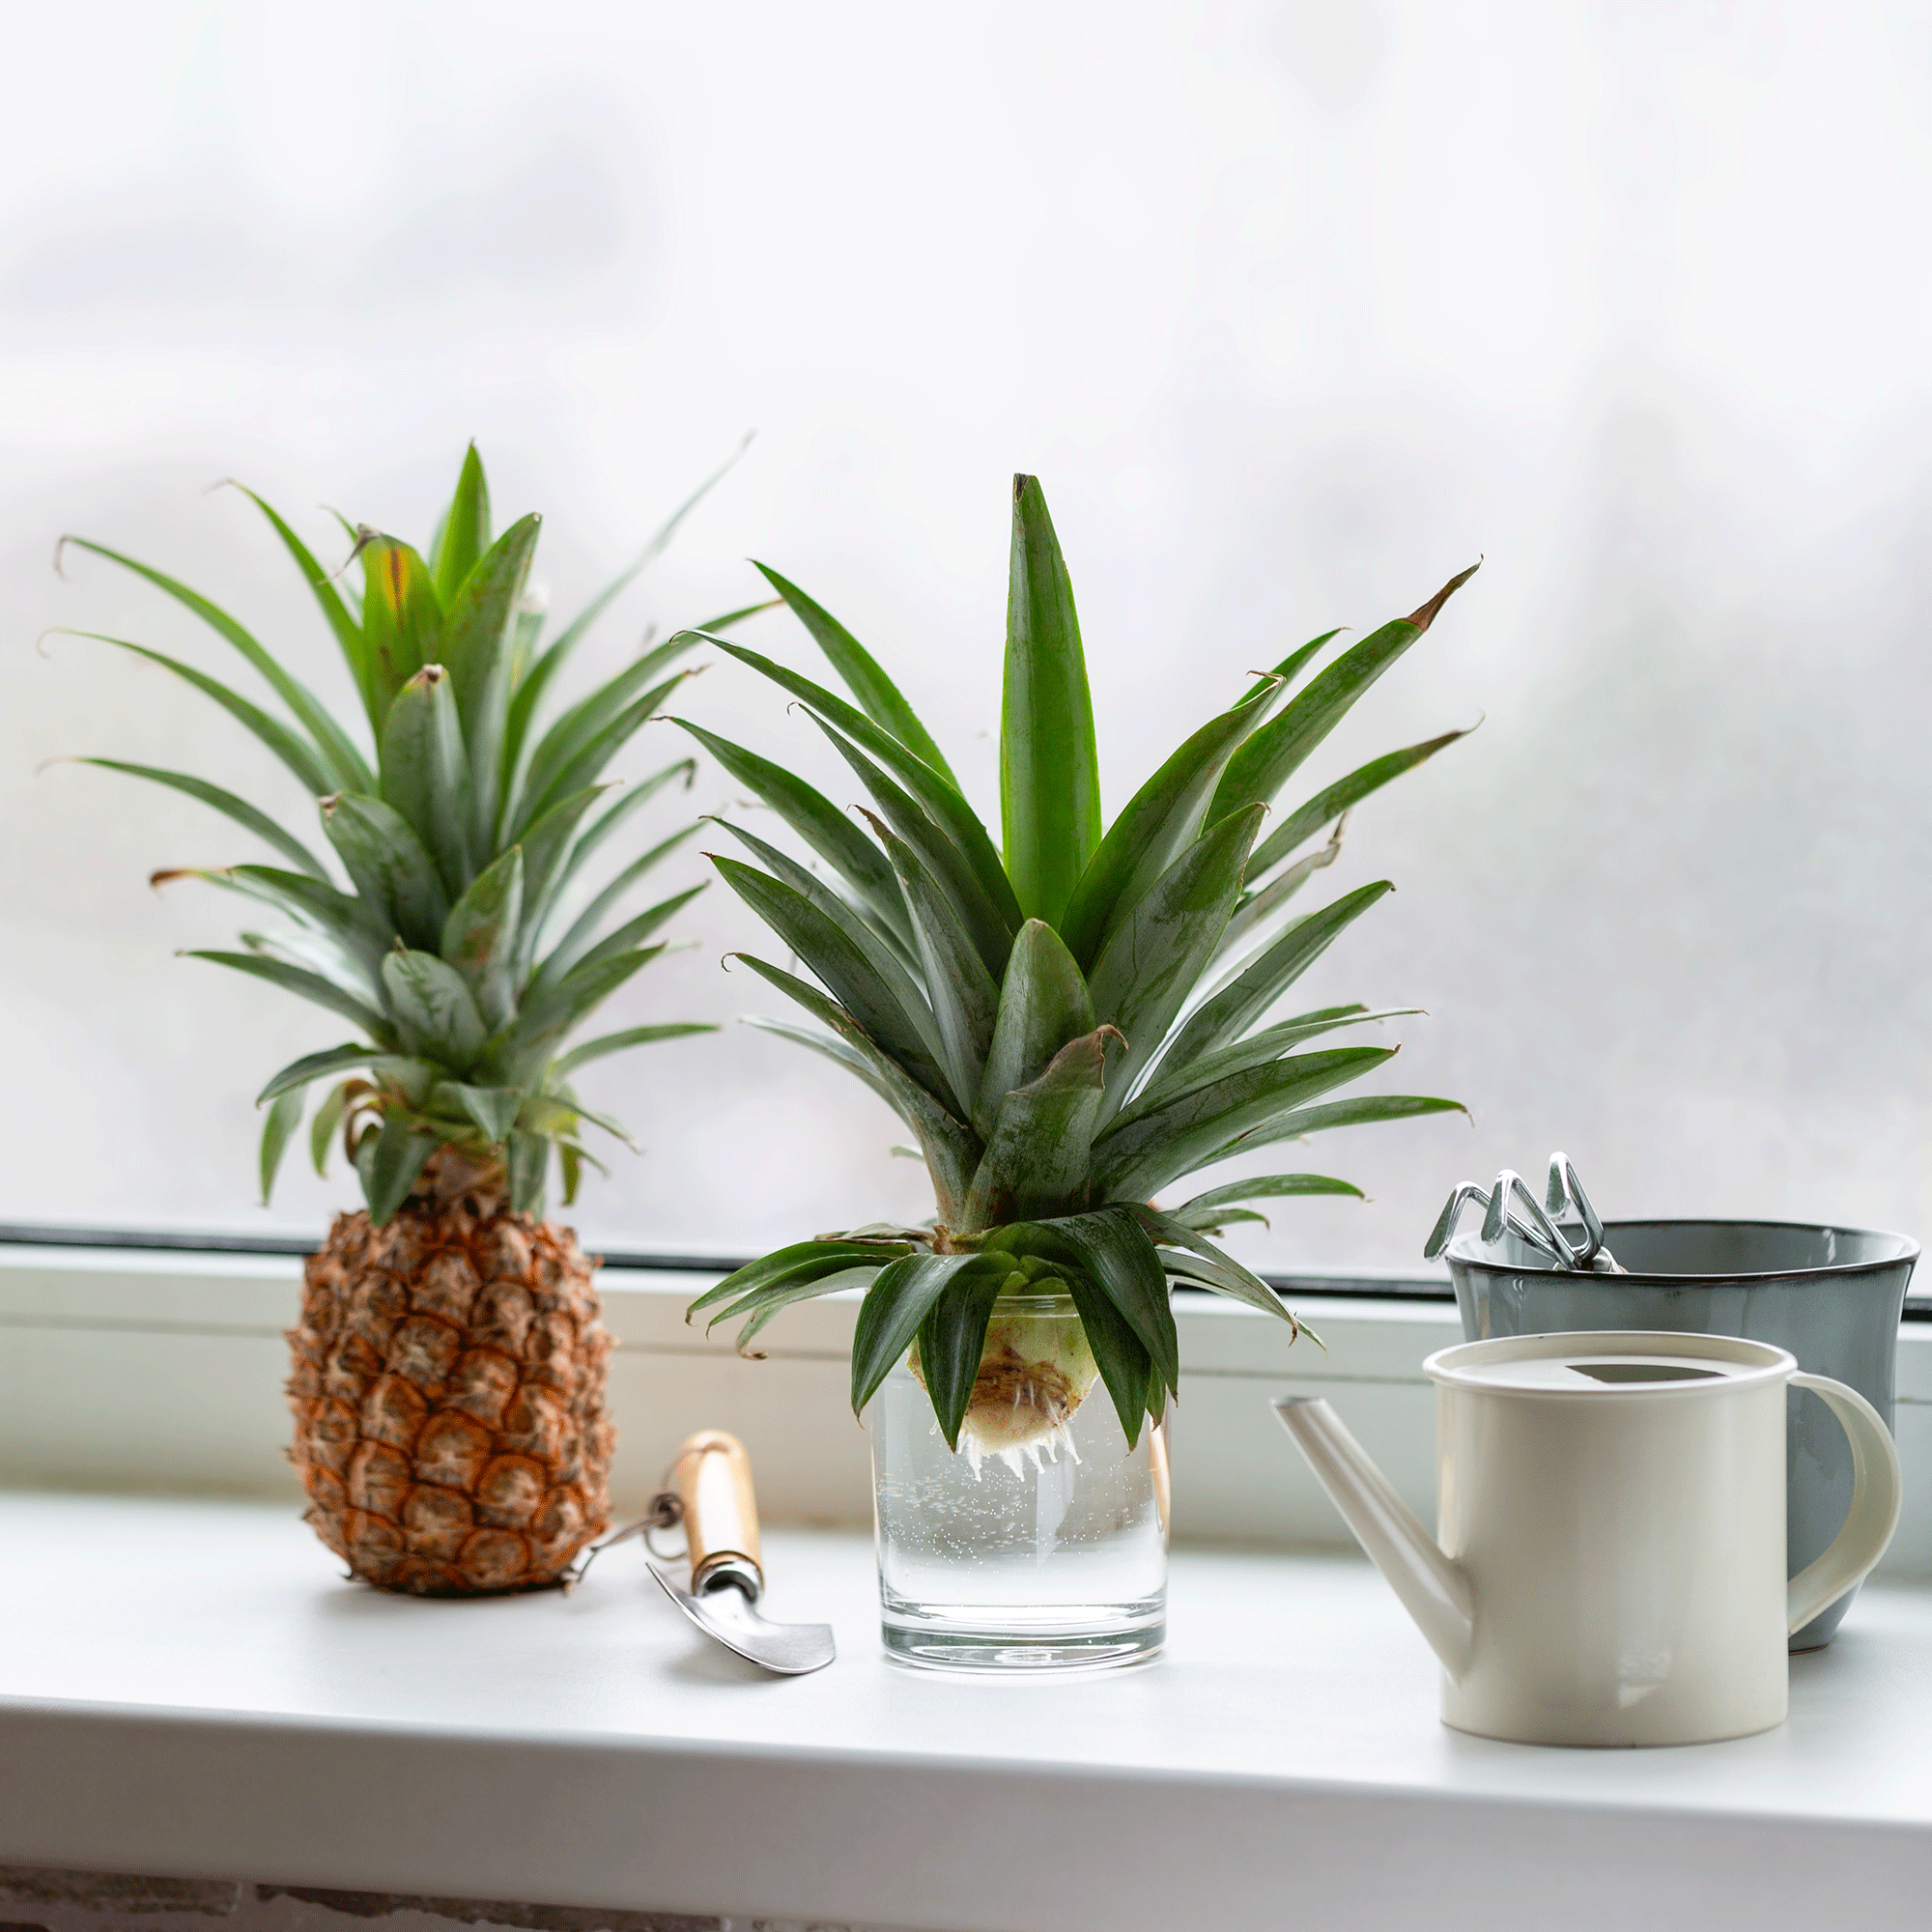 Pineapple on windowsill with pineapple cutting